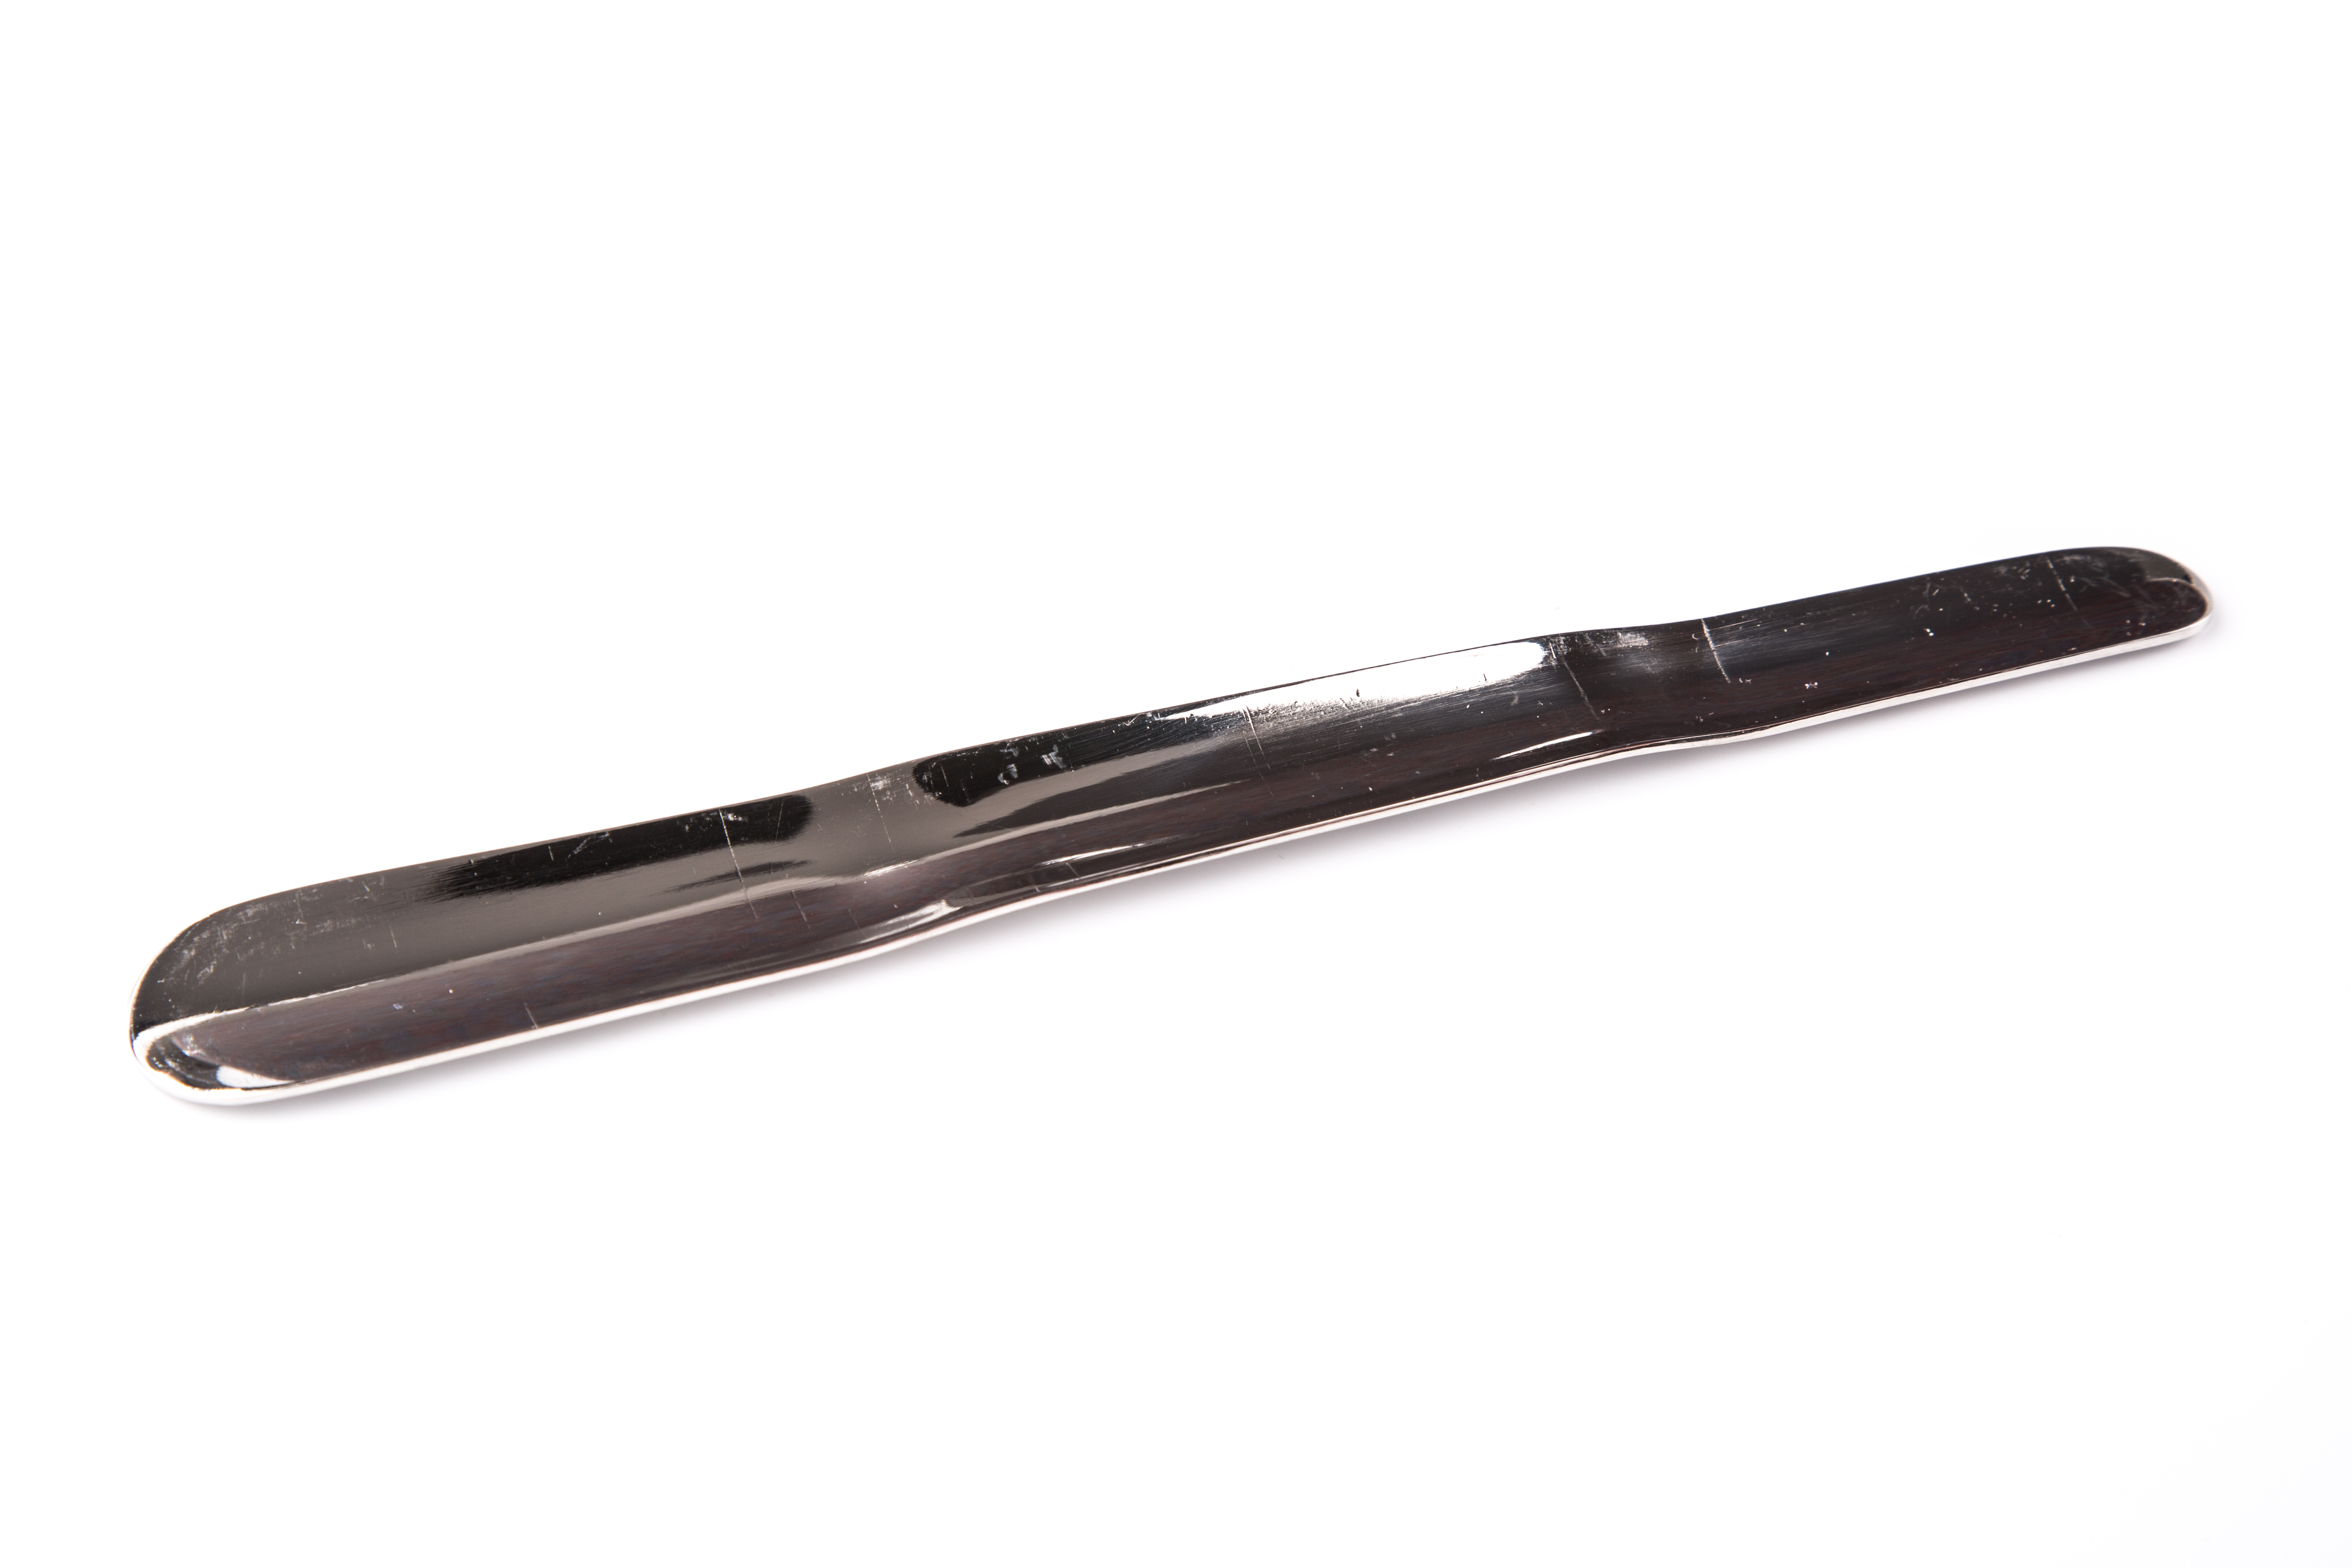 Stainless steel Trulla spatula, 175mm